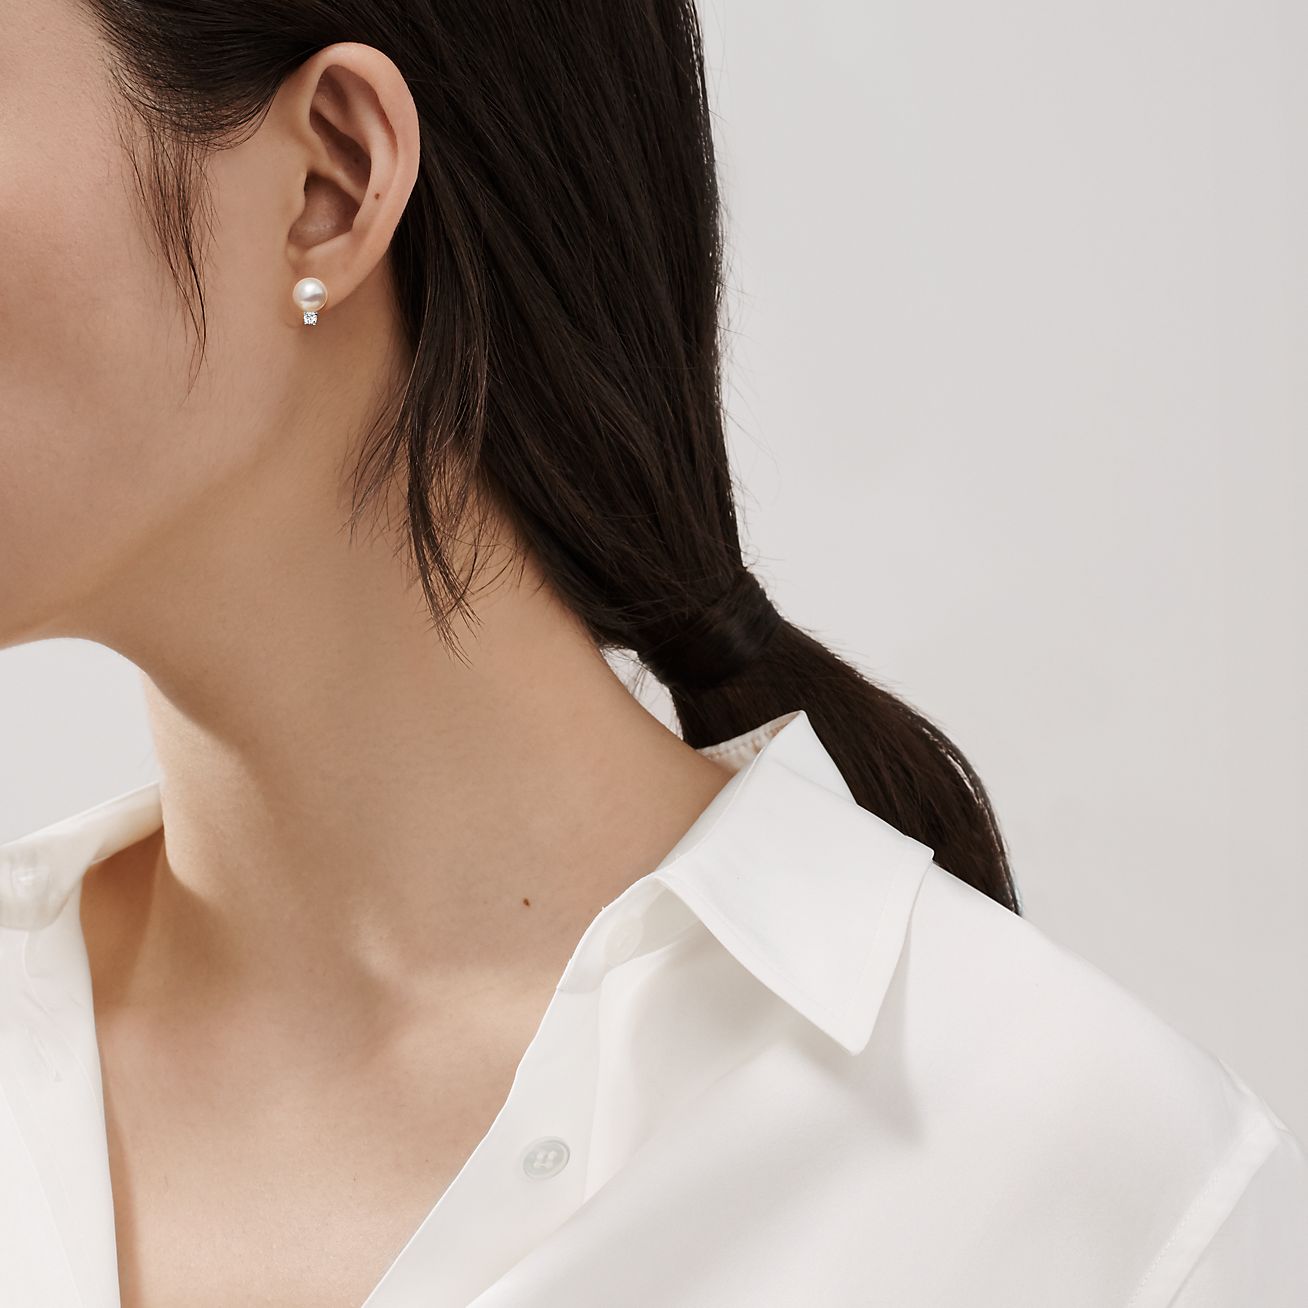 Tiffany Signature™ Pearls earrings in 